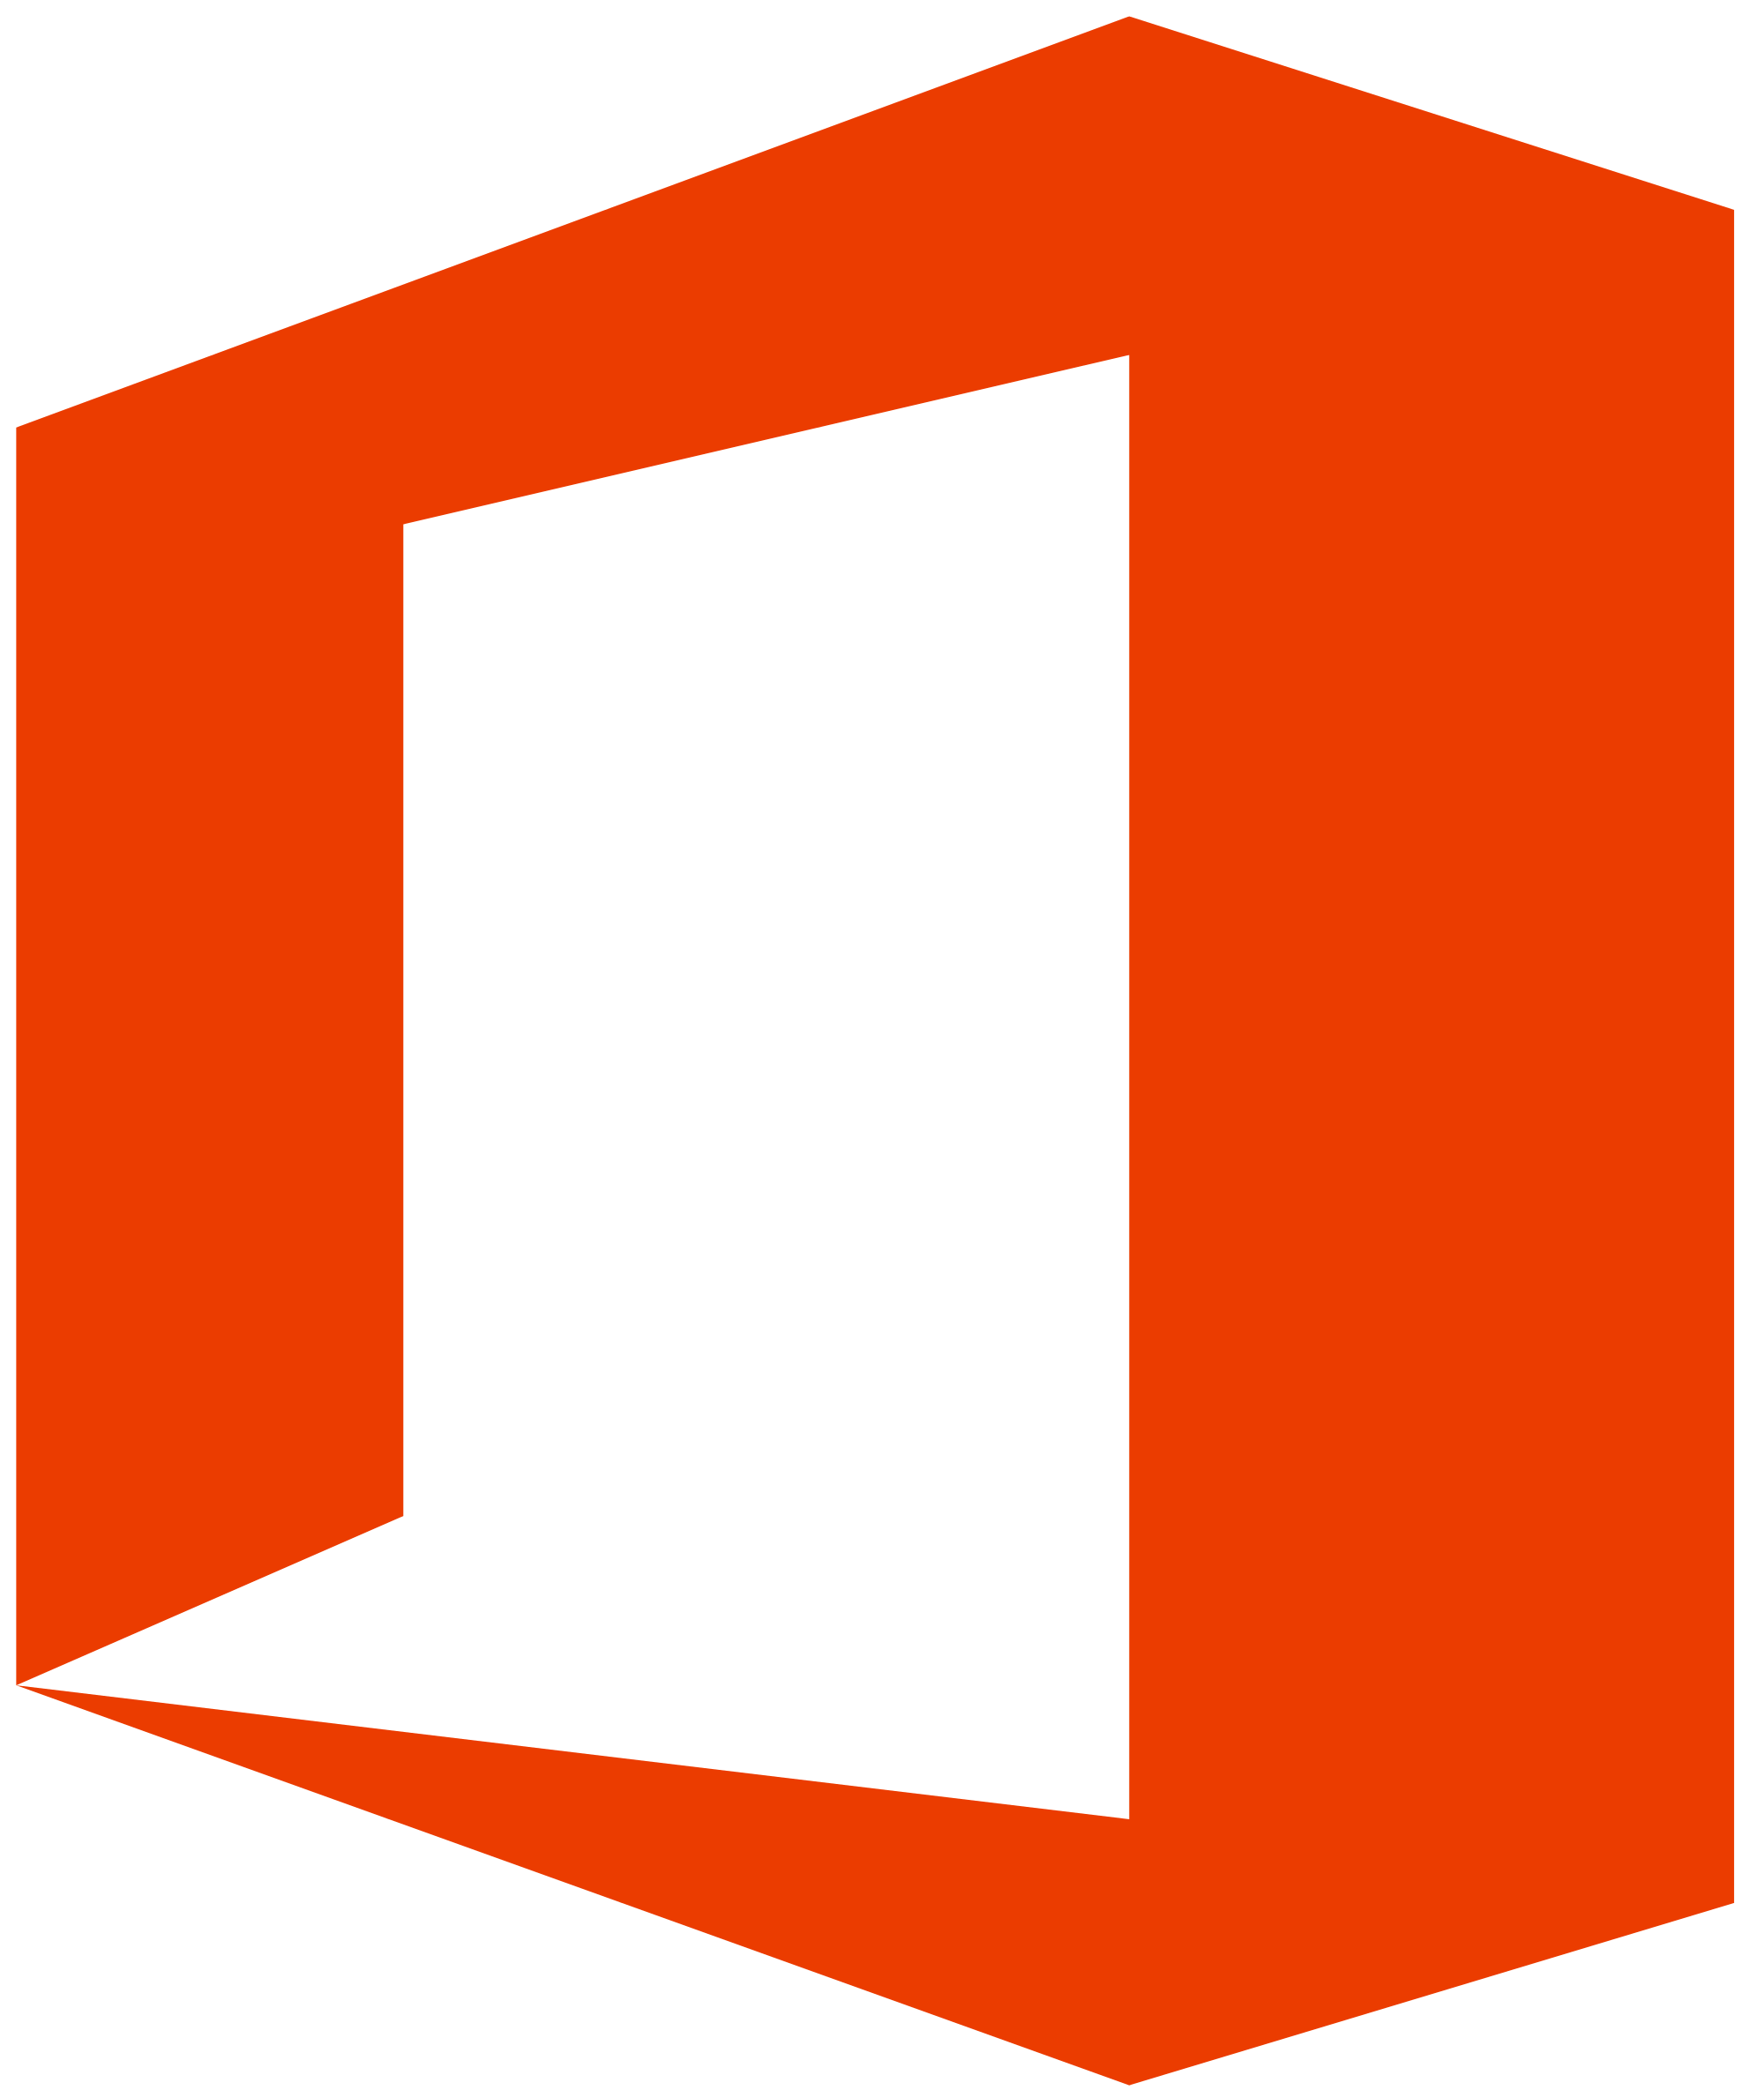 Microsoft Office 2013 Logo - File:Microsoft Office 2013 logo.svg - Wikimedia Commons